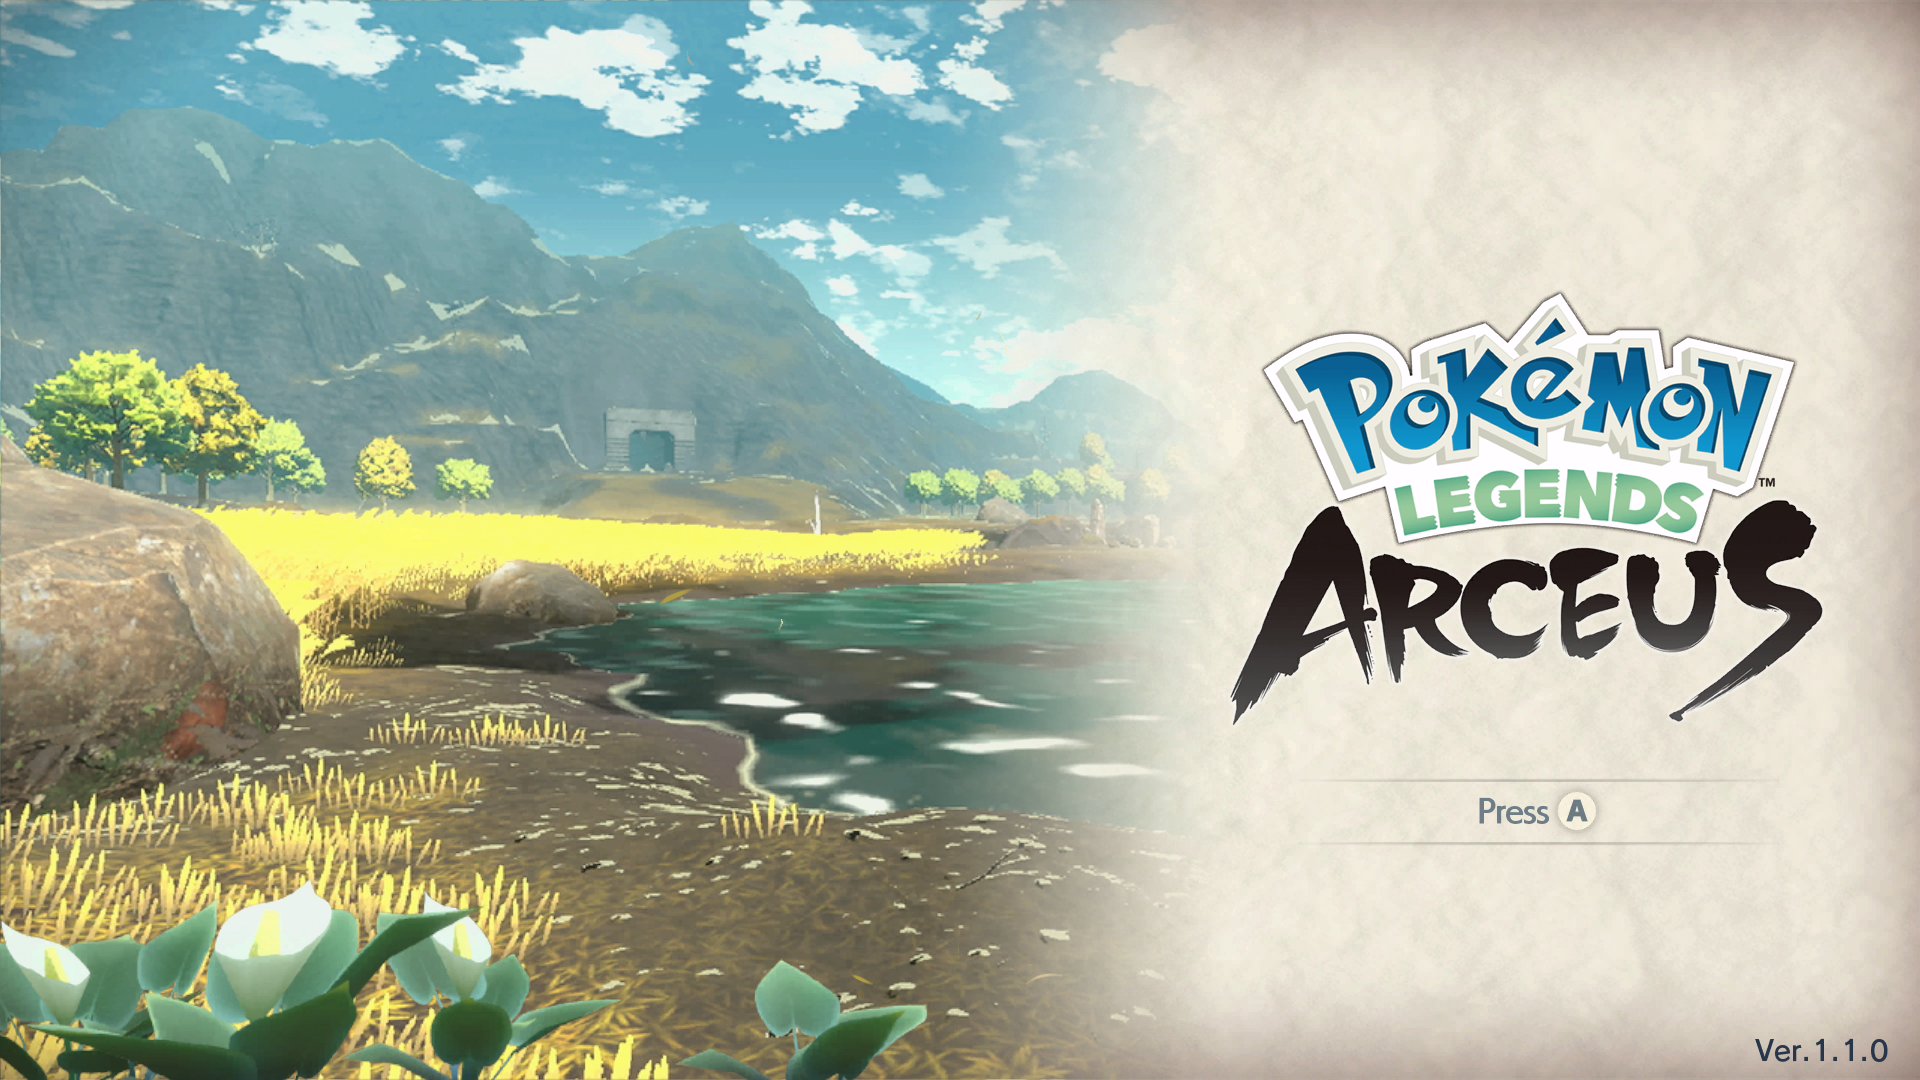 Pokemon Legends: Arceus Daybreak update available now